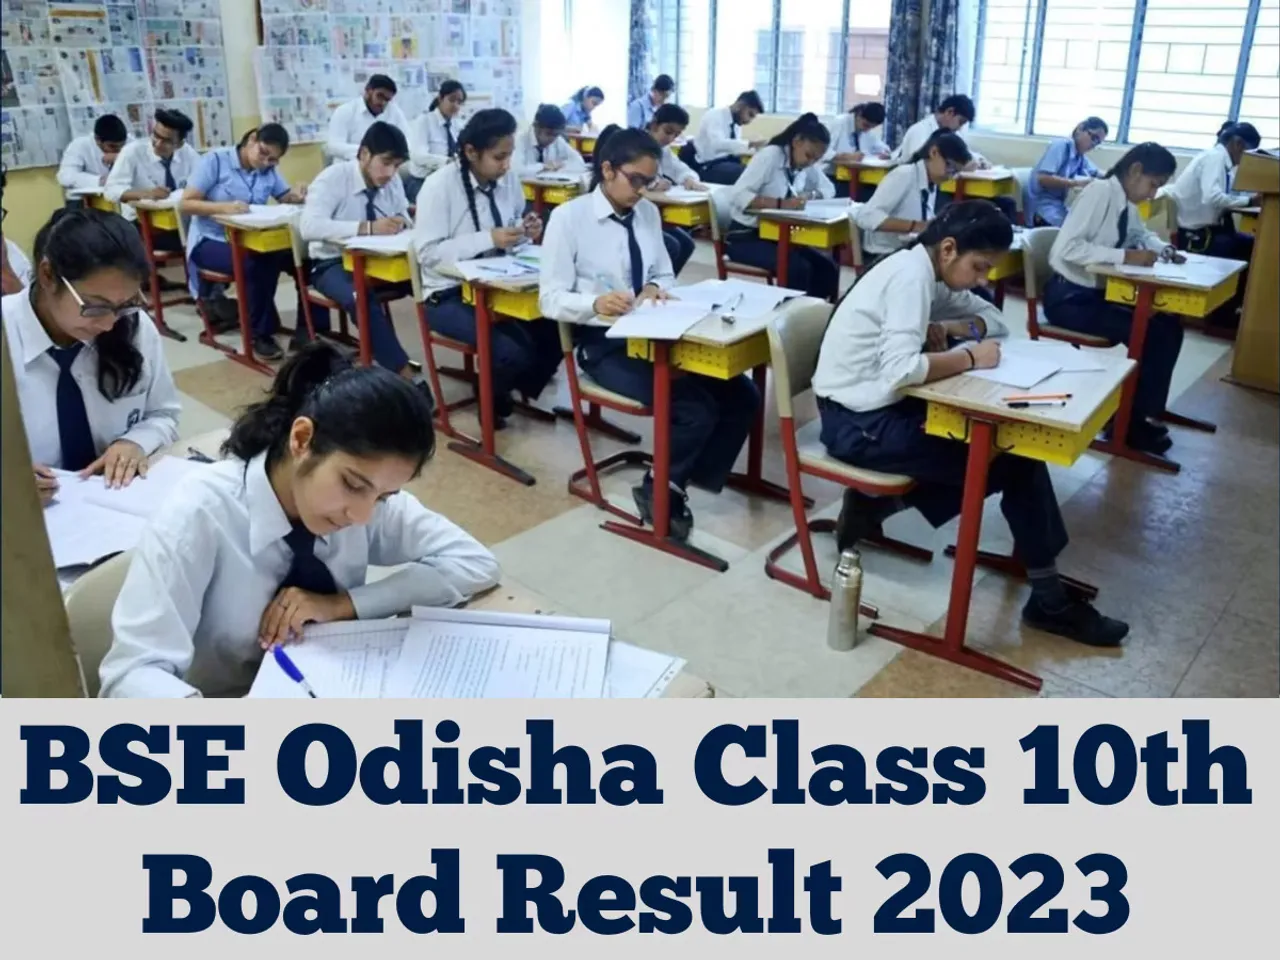 bse odisha class 10th board result 2023.jpg